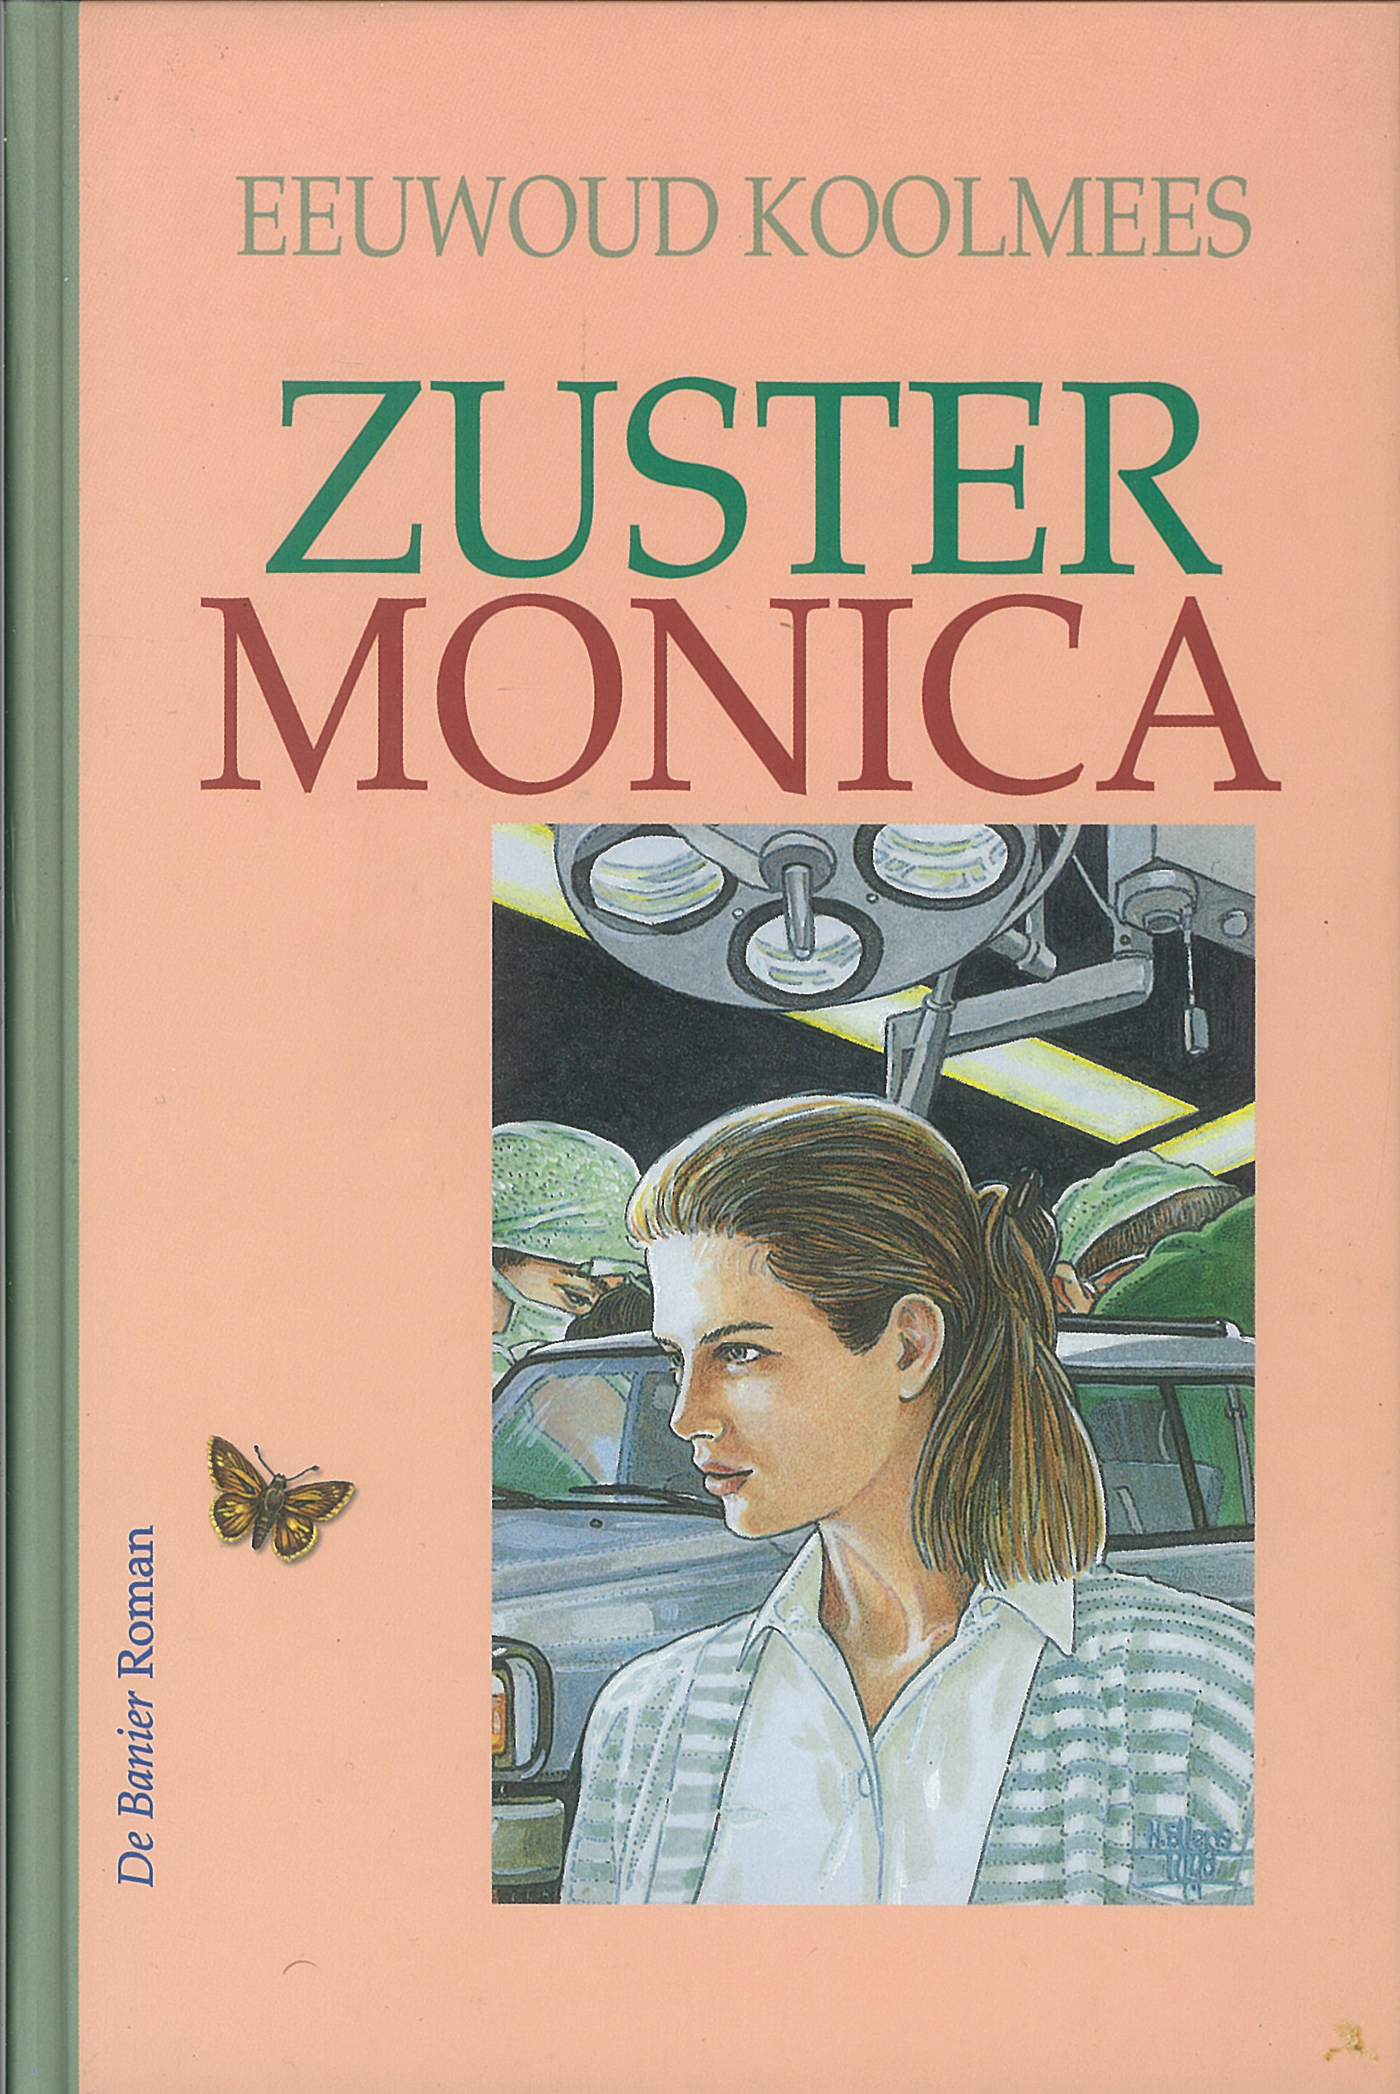 Zuster Monica (Ebook)